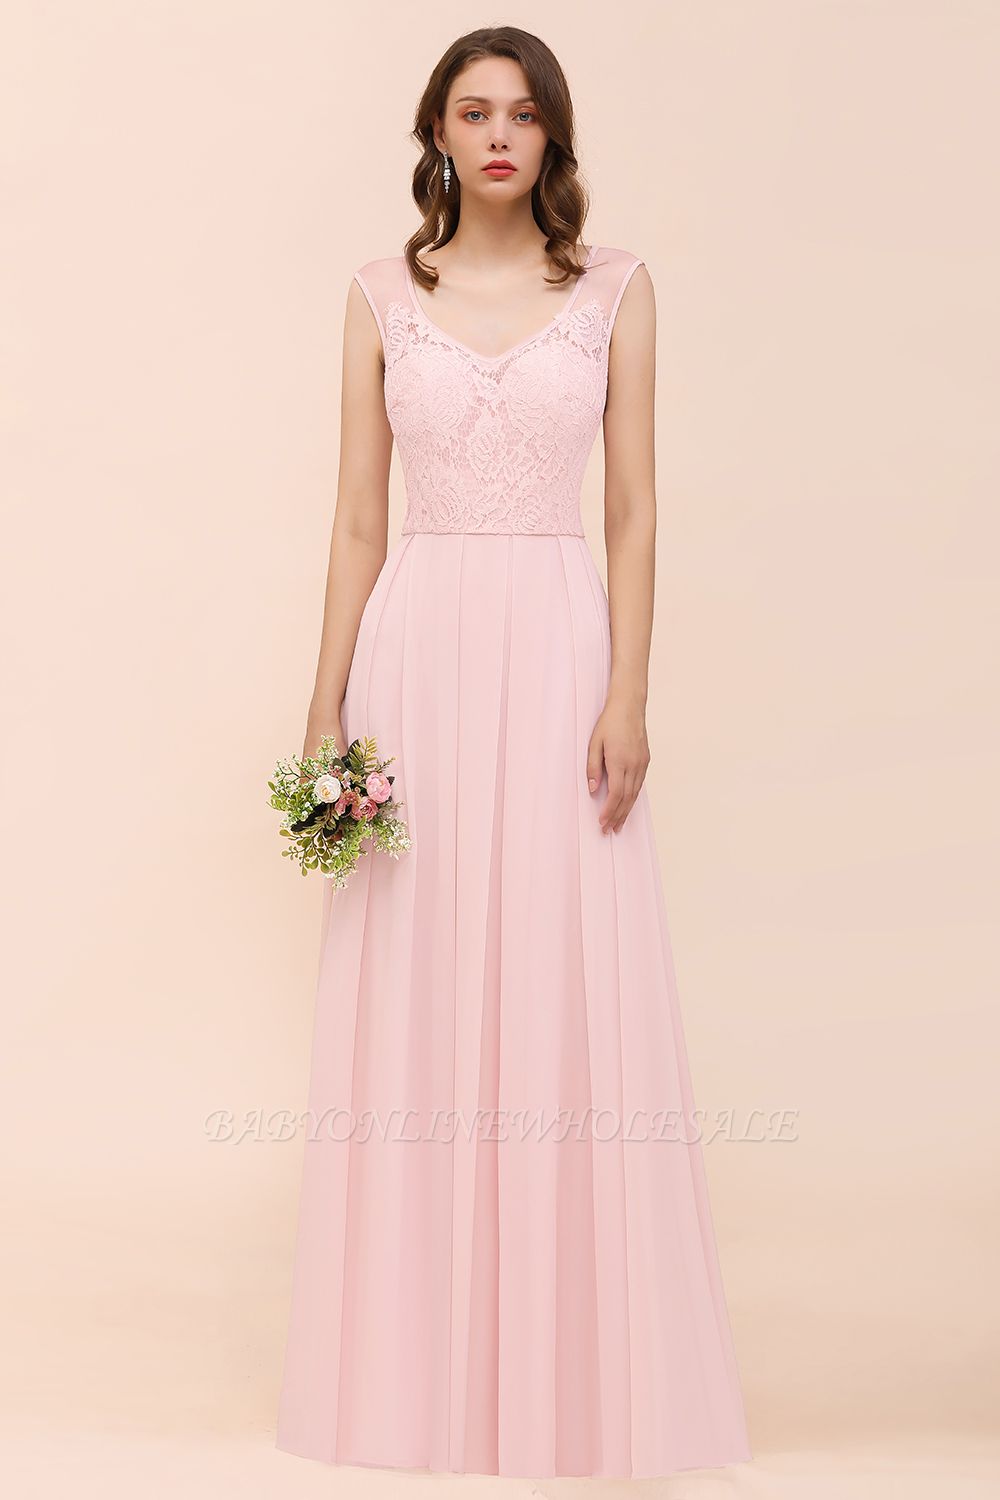 Romantic Sleeveless Lace Chiffon Wedding Guest Dress V-Neck Bridesmaid Dress